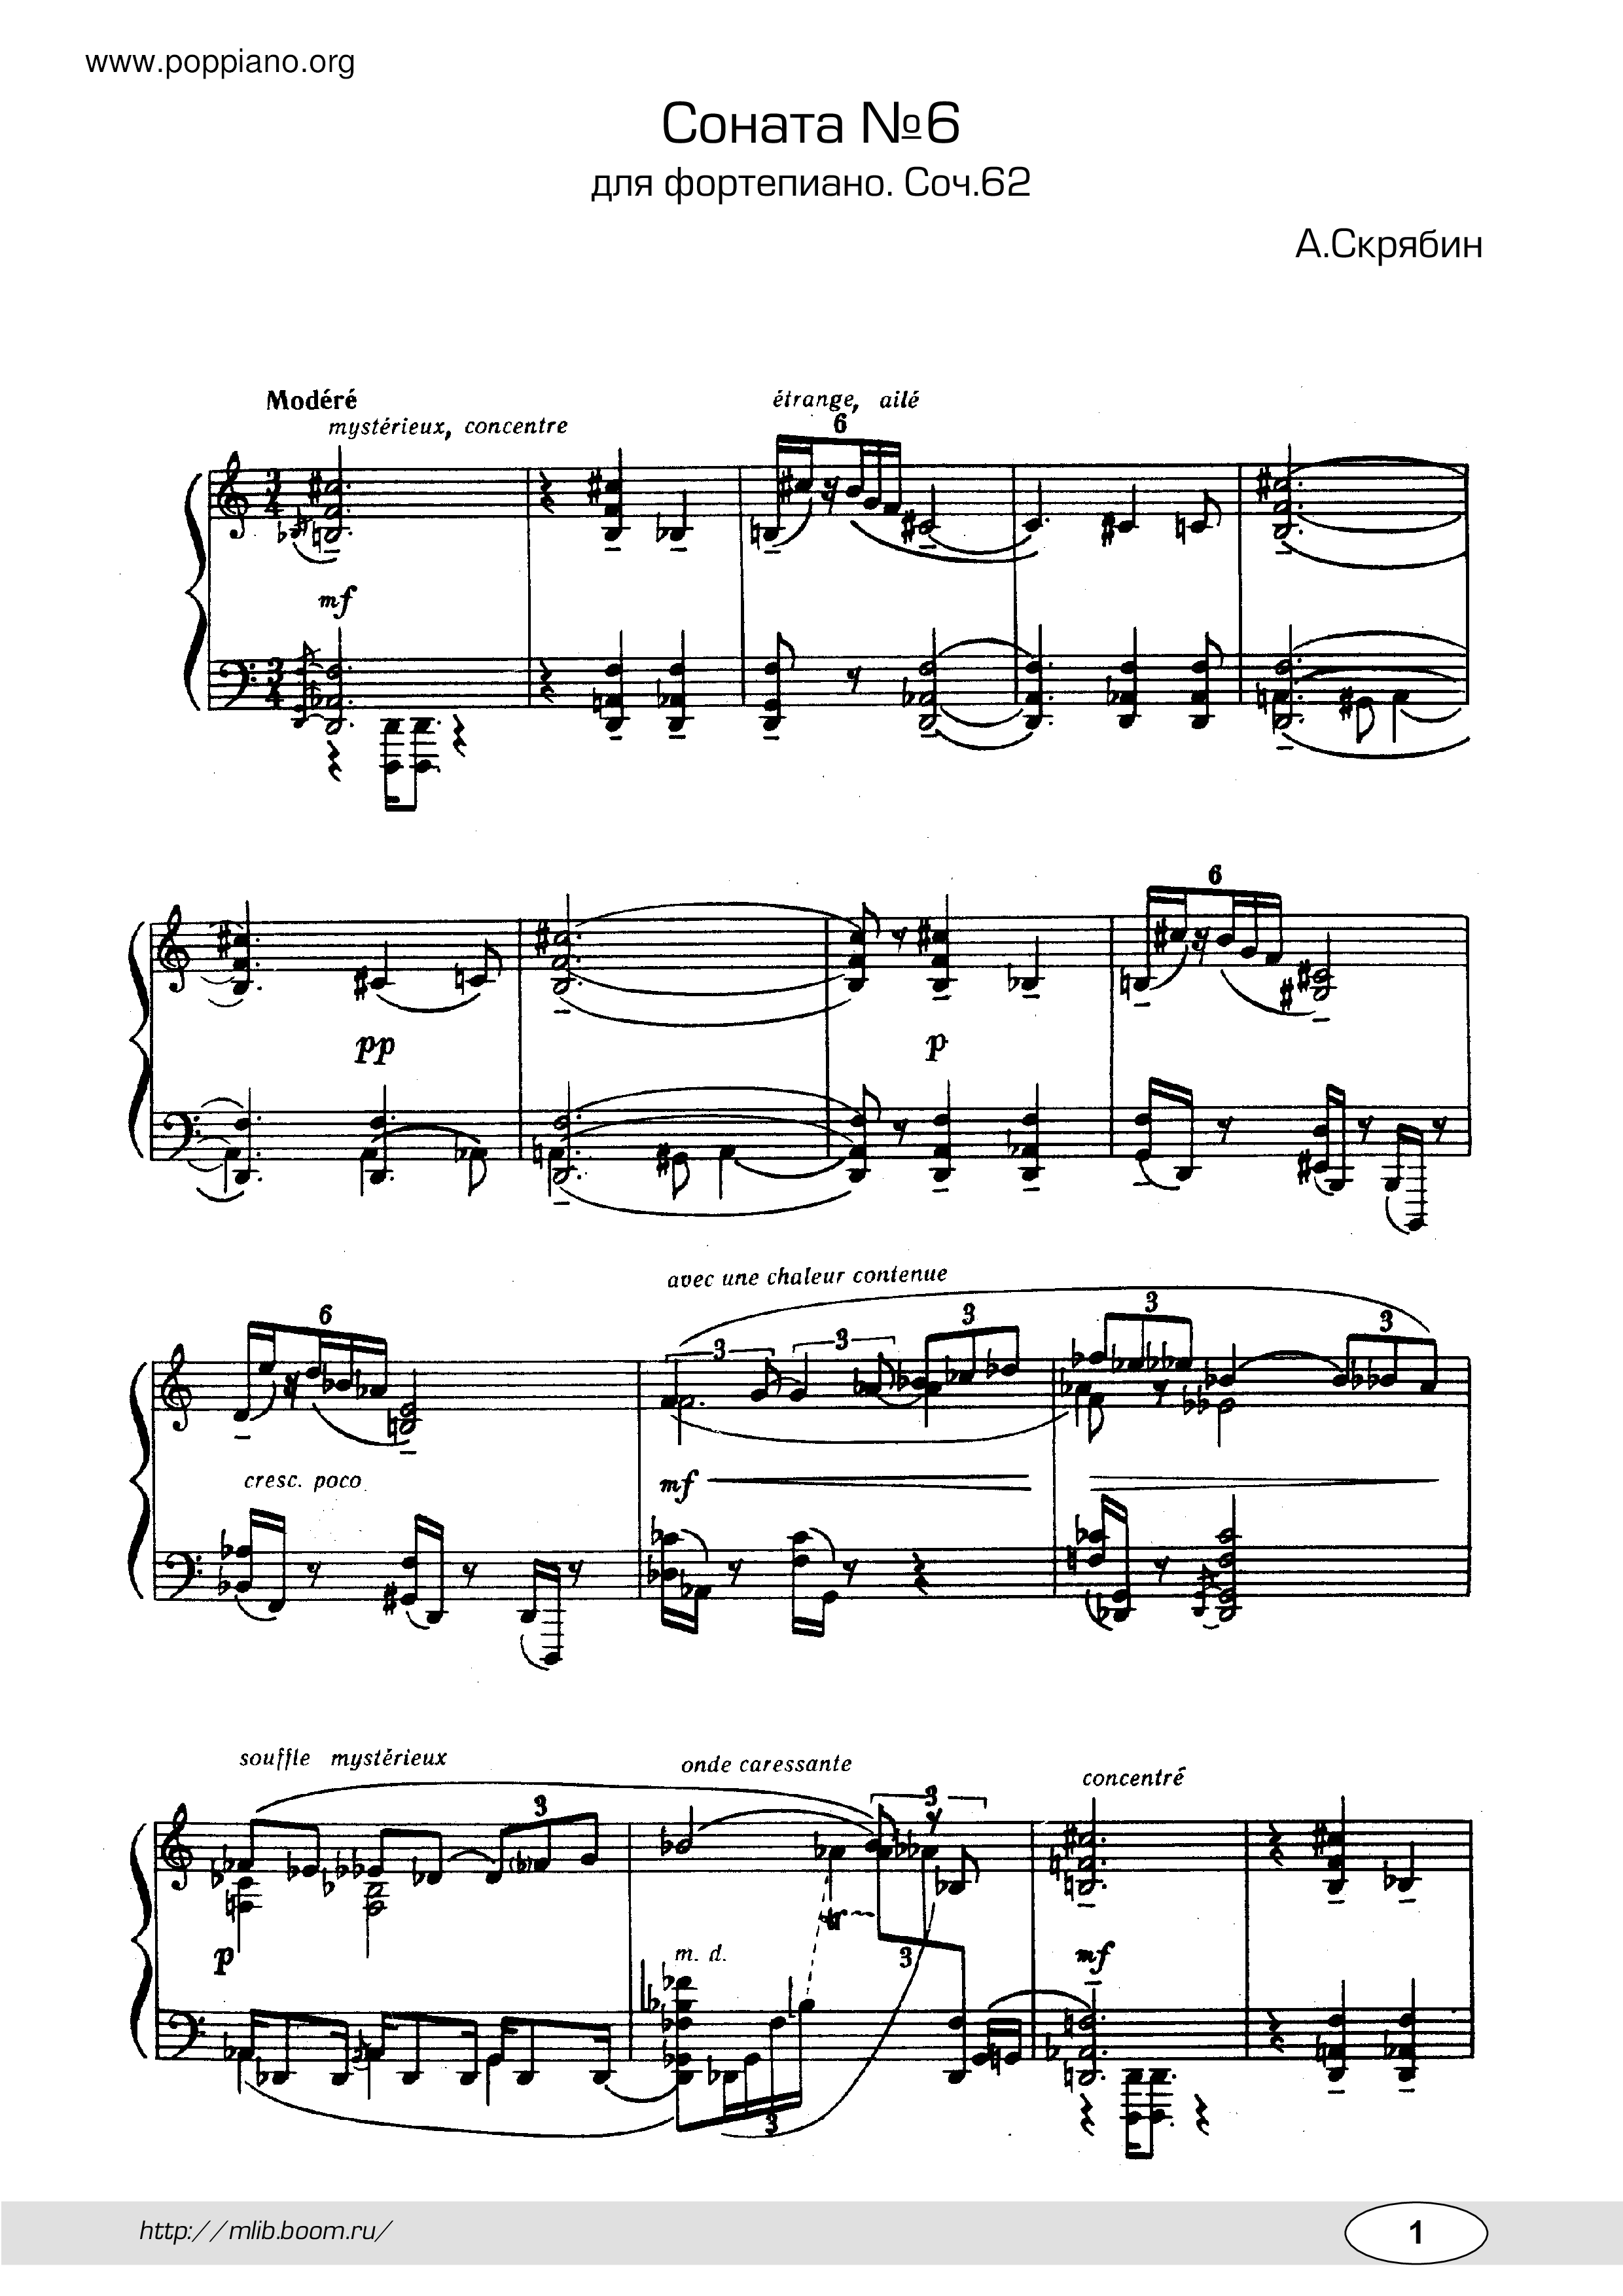 Piano Sonata No.6, Op.62琴谱